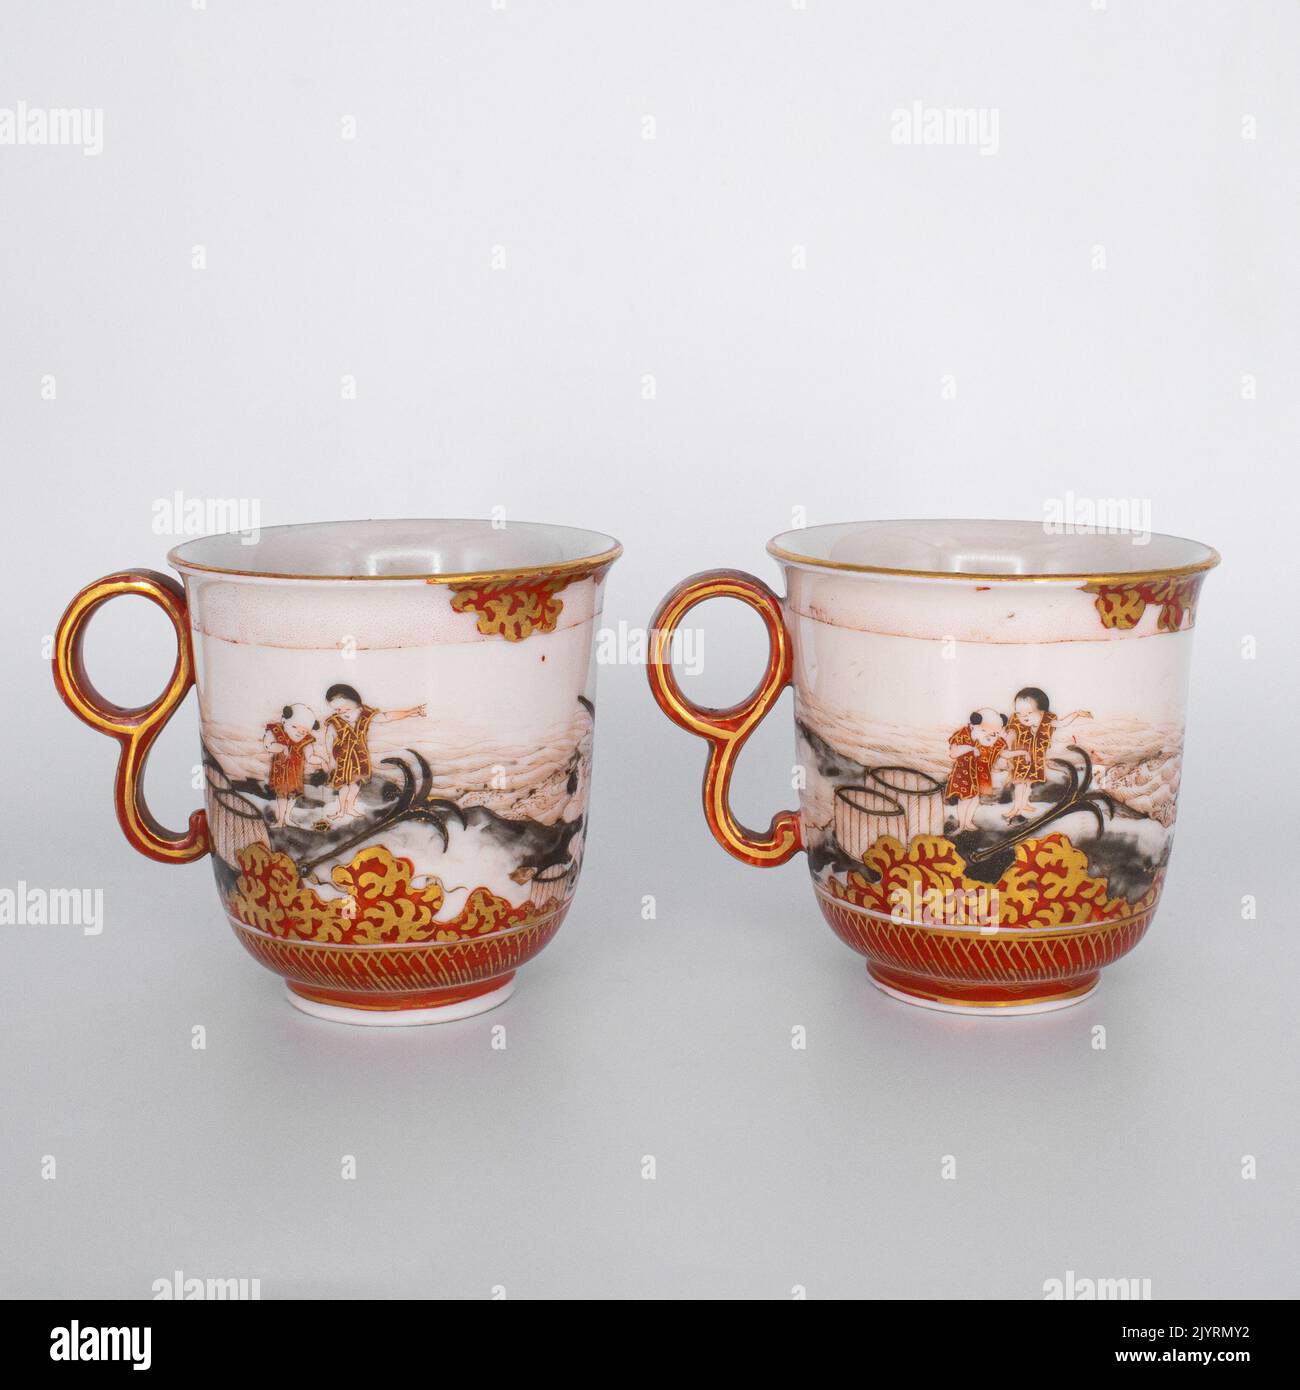 https://c8.alamy.com/comp/2JYRMY2/fine-antique-japanese-kutani-porcelain-teapot-and-cups-by-kachoken-meiji-period-2JYRMY2.jpg